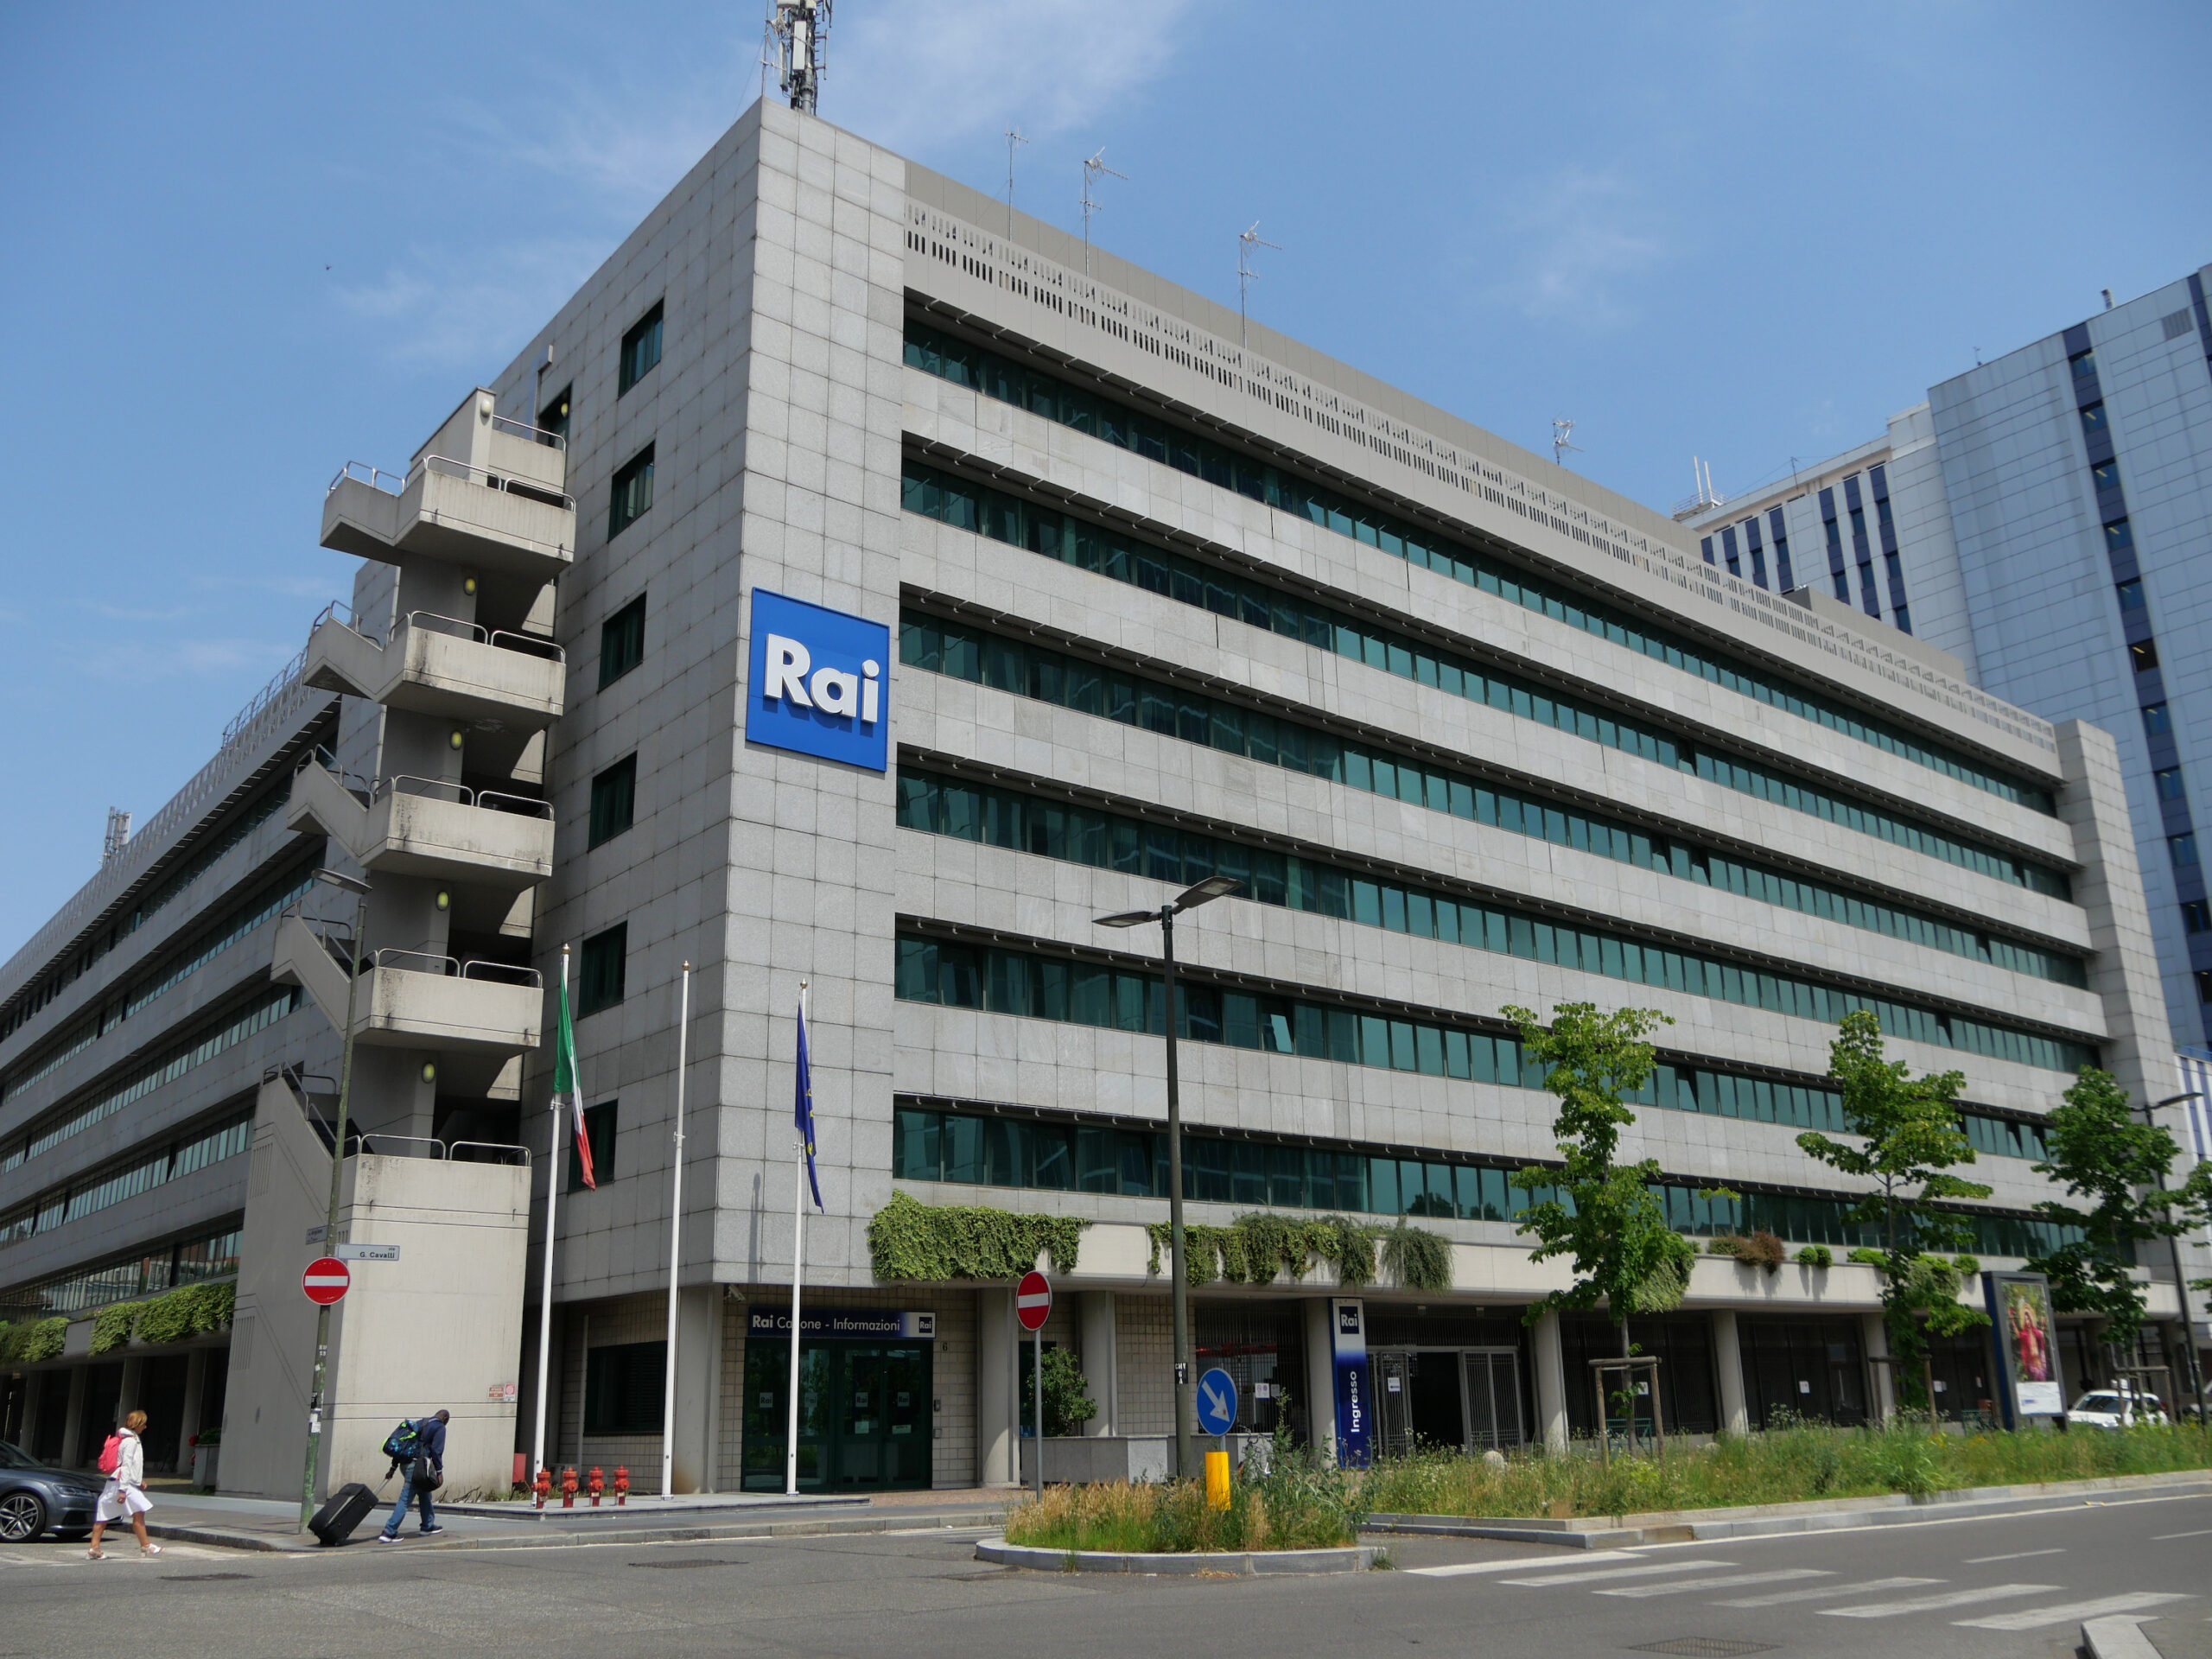 Exterior shot of Rai headquarters with Rai logo.